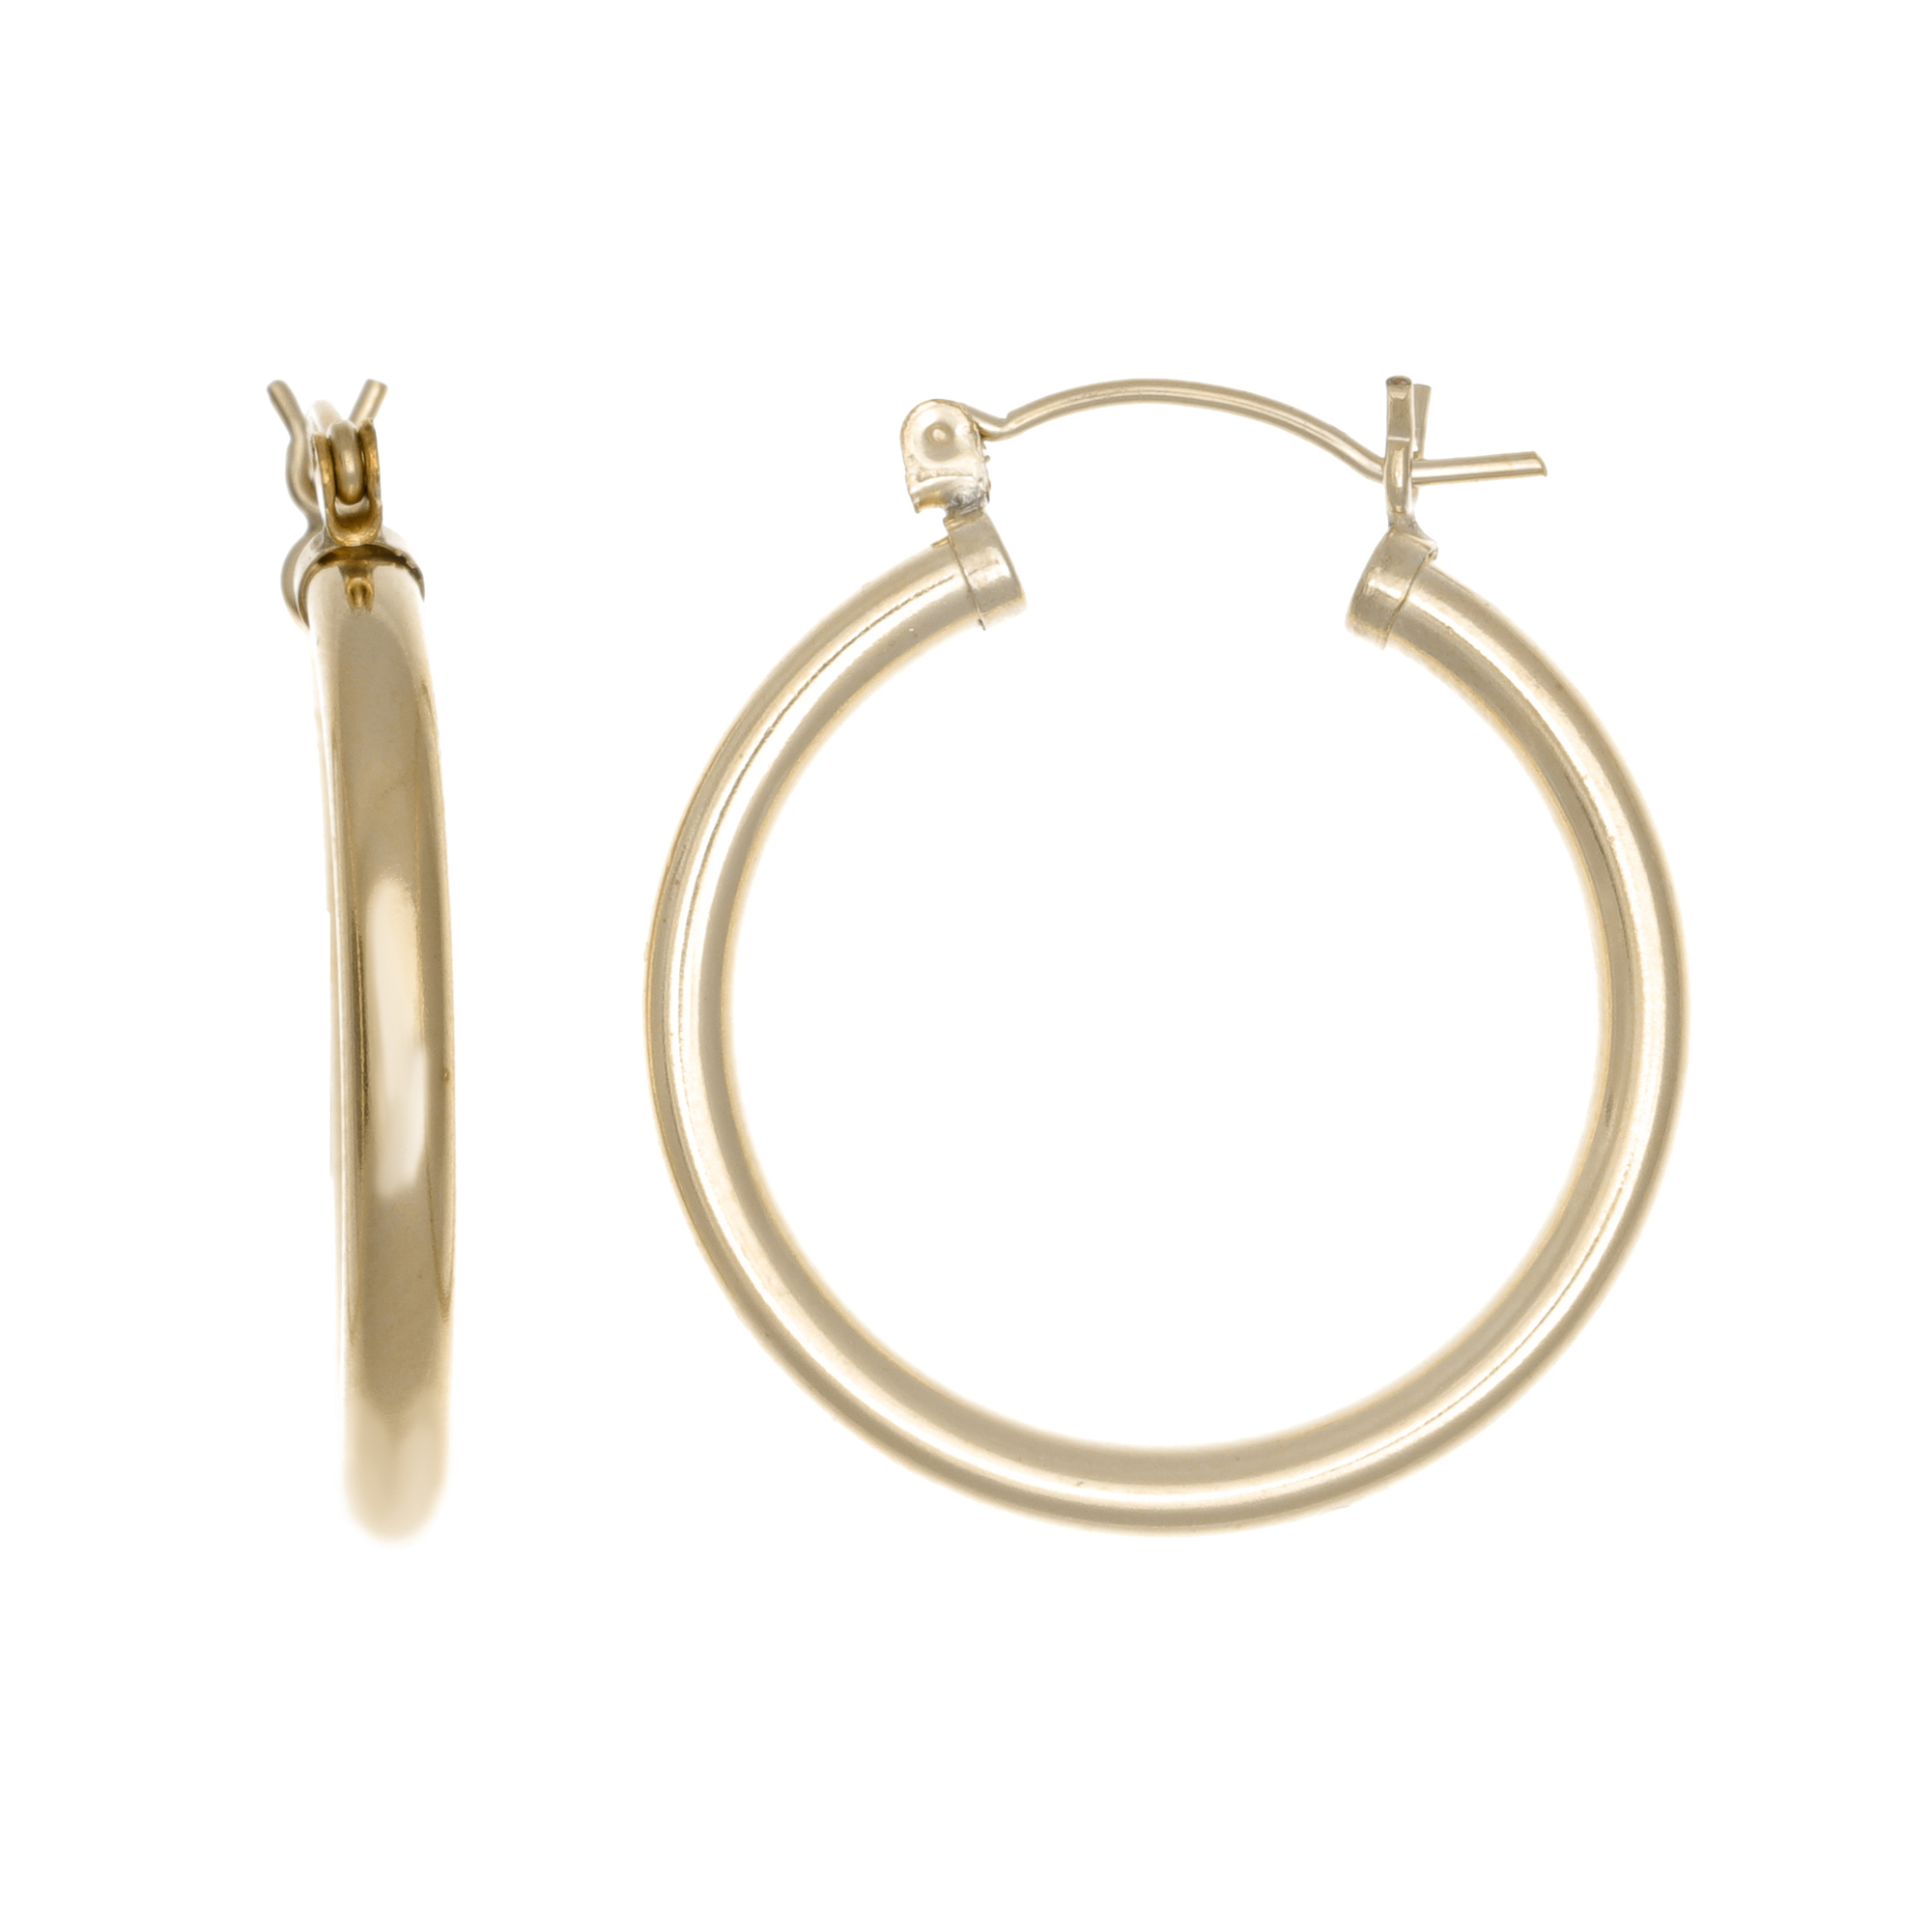 48519-earrings-fashion-jewelry-yellow-gold-48519-1.jpg